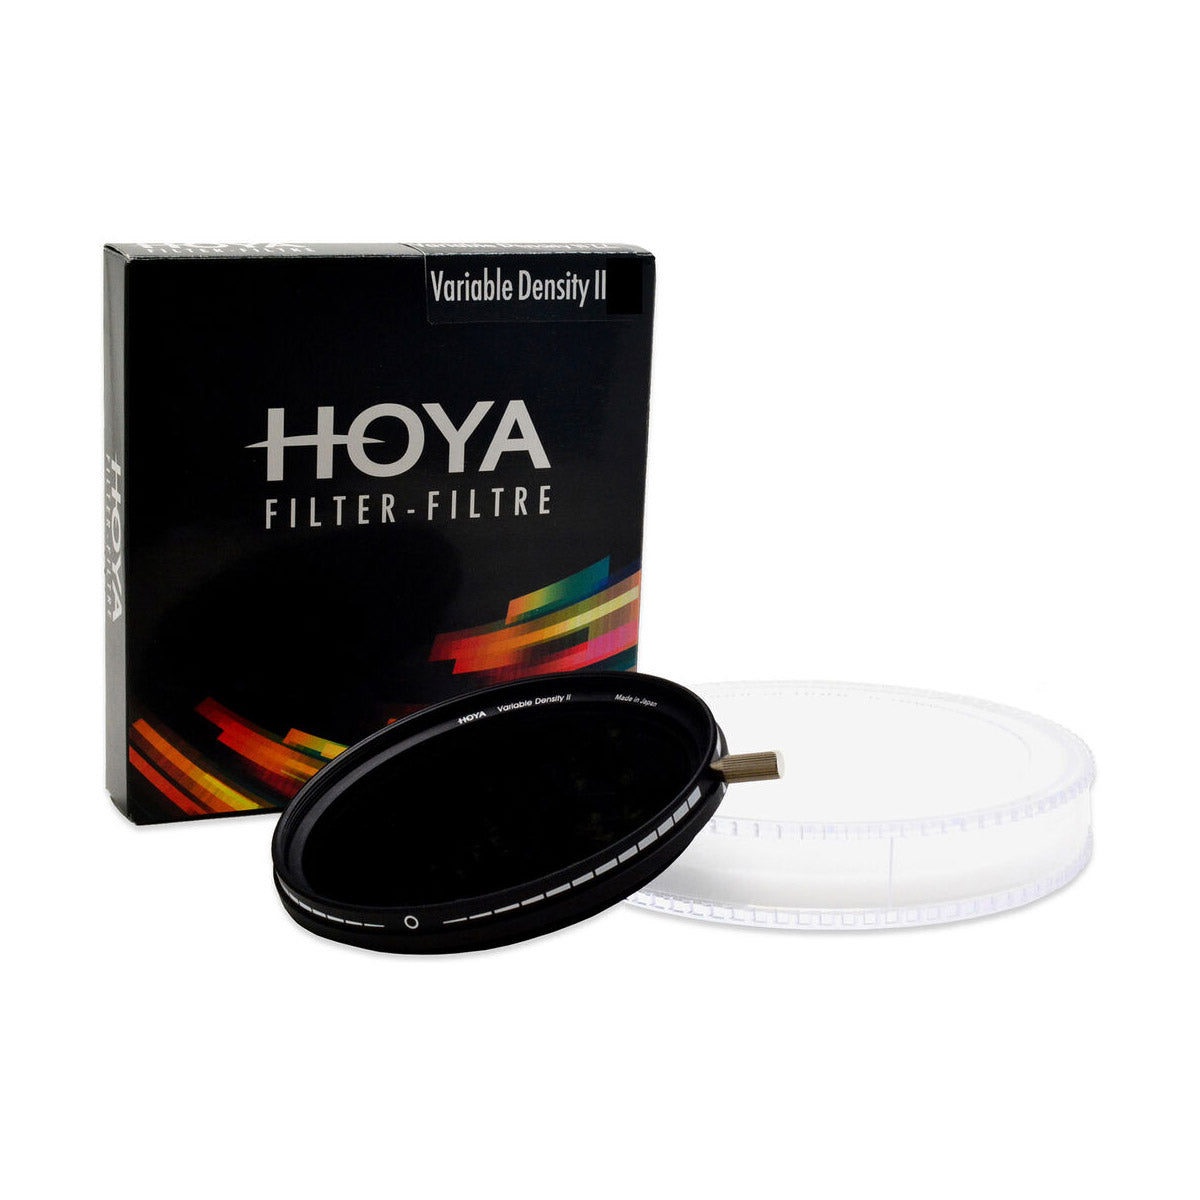 Hoya 72mm Variable Density II ND Filter